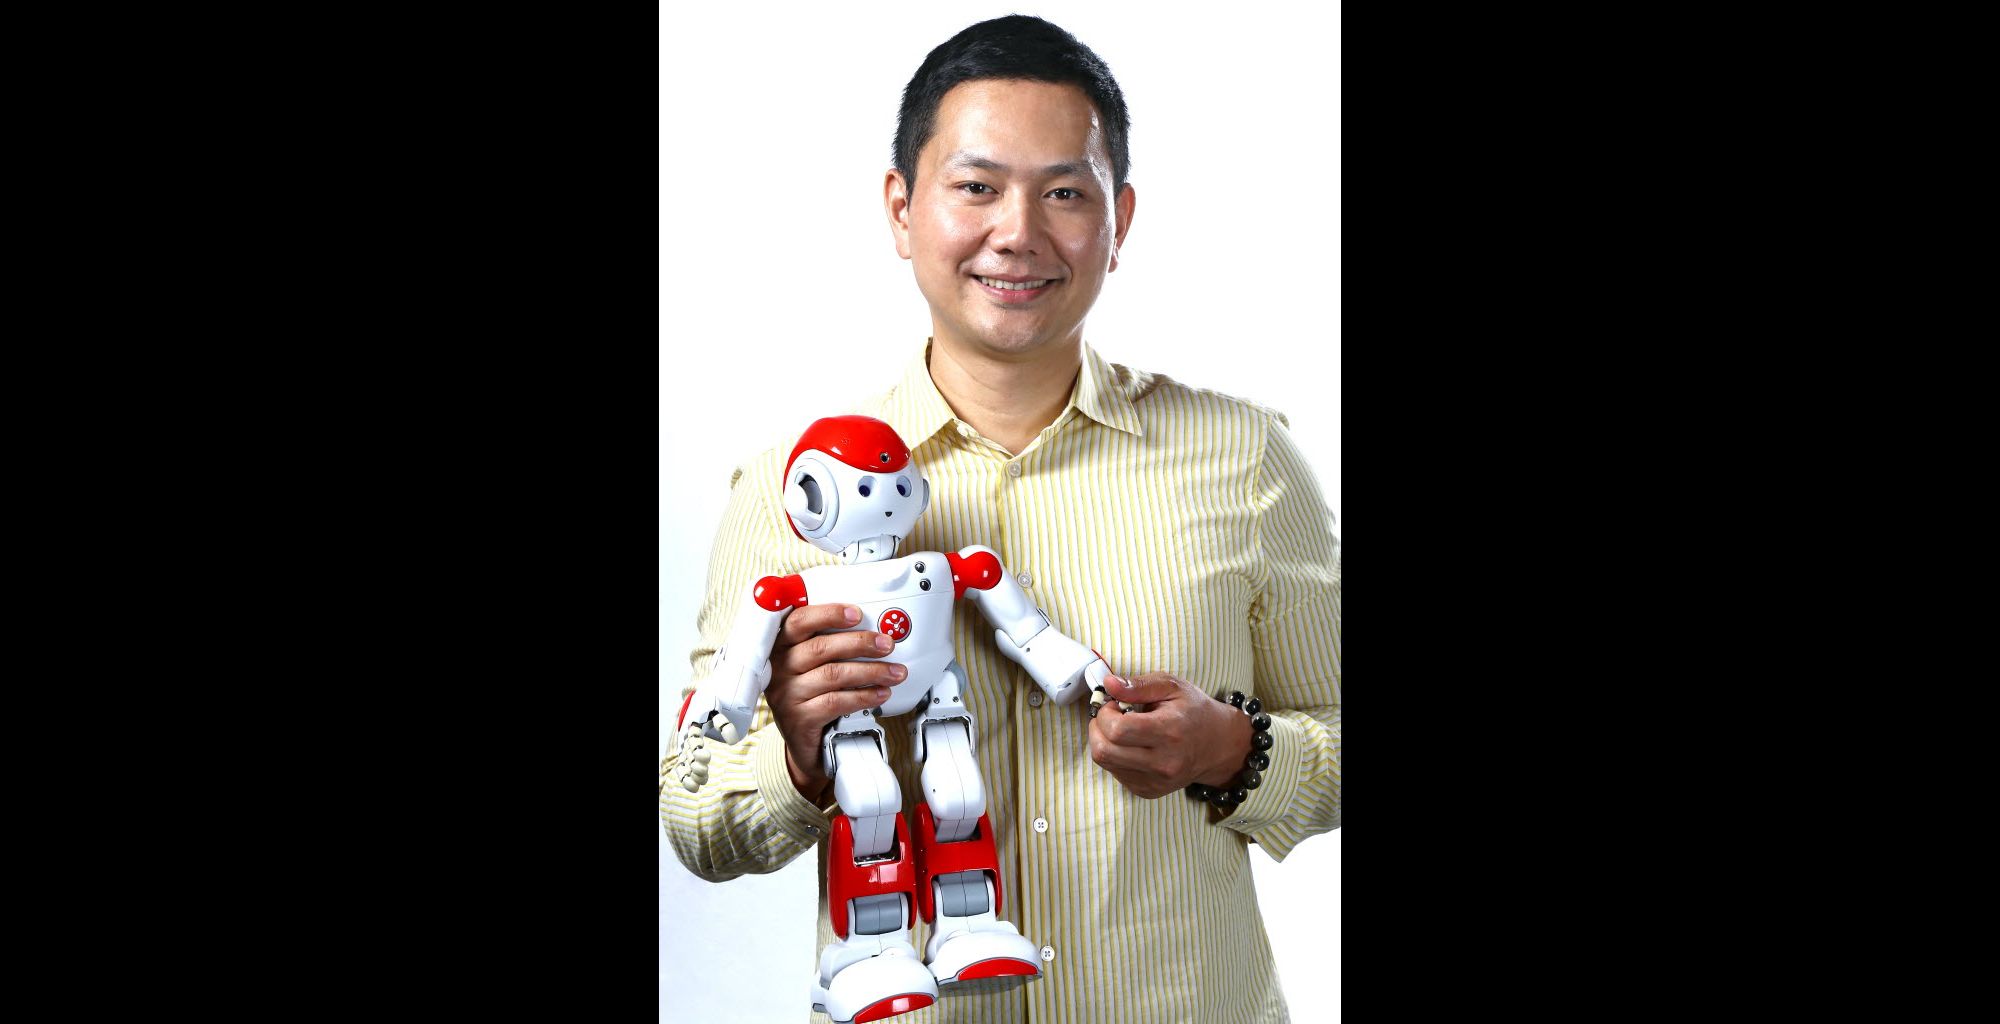 UBTech executive director Goti Deng says humanoid robots can be versatile family companions and helpers.